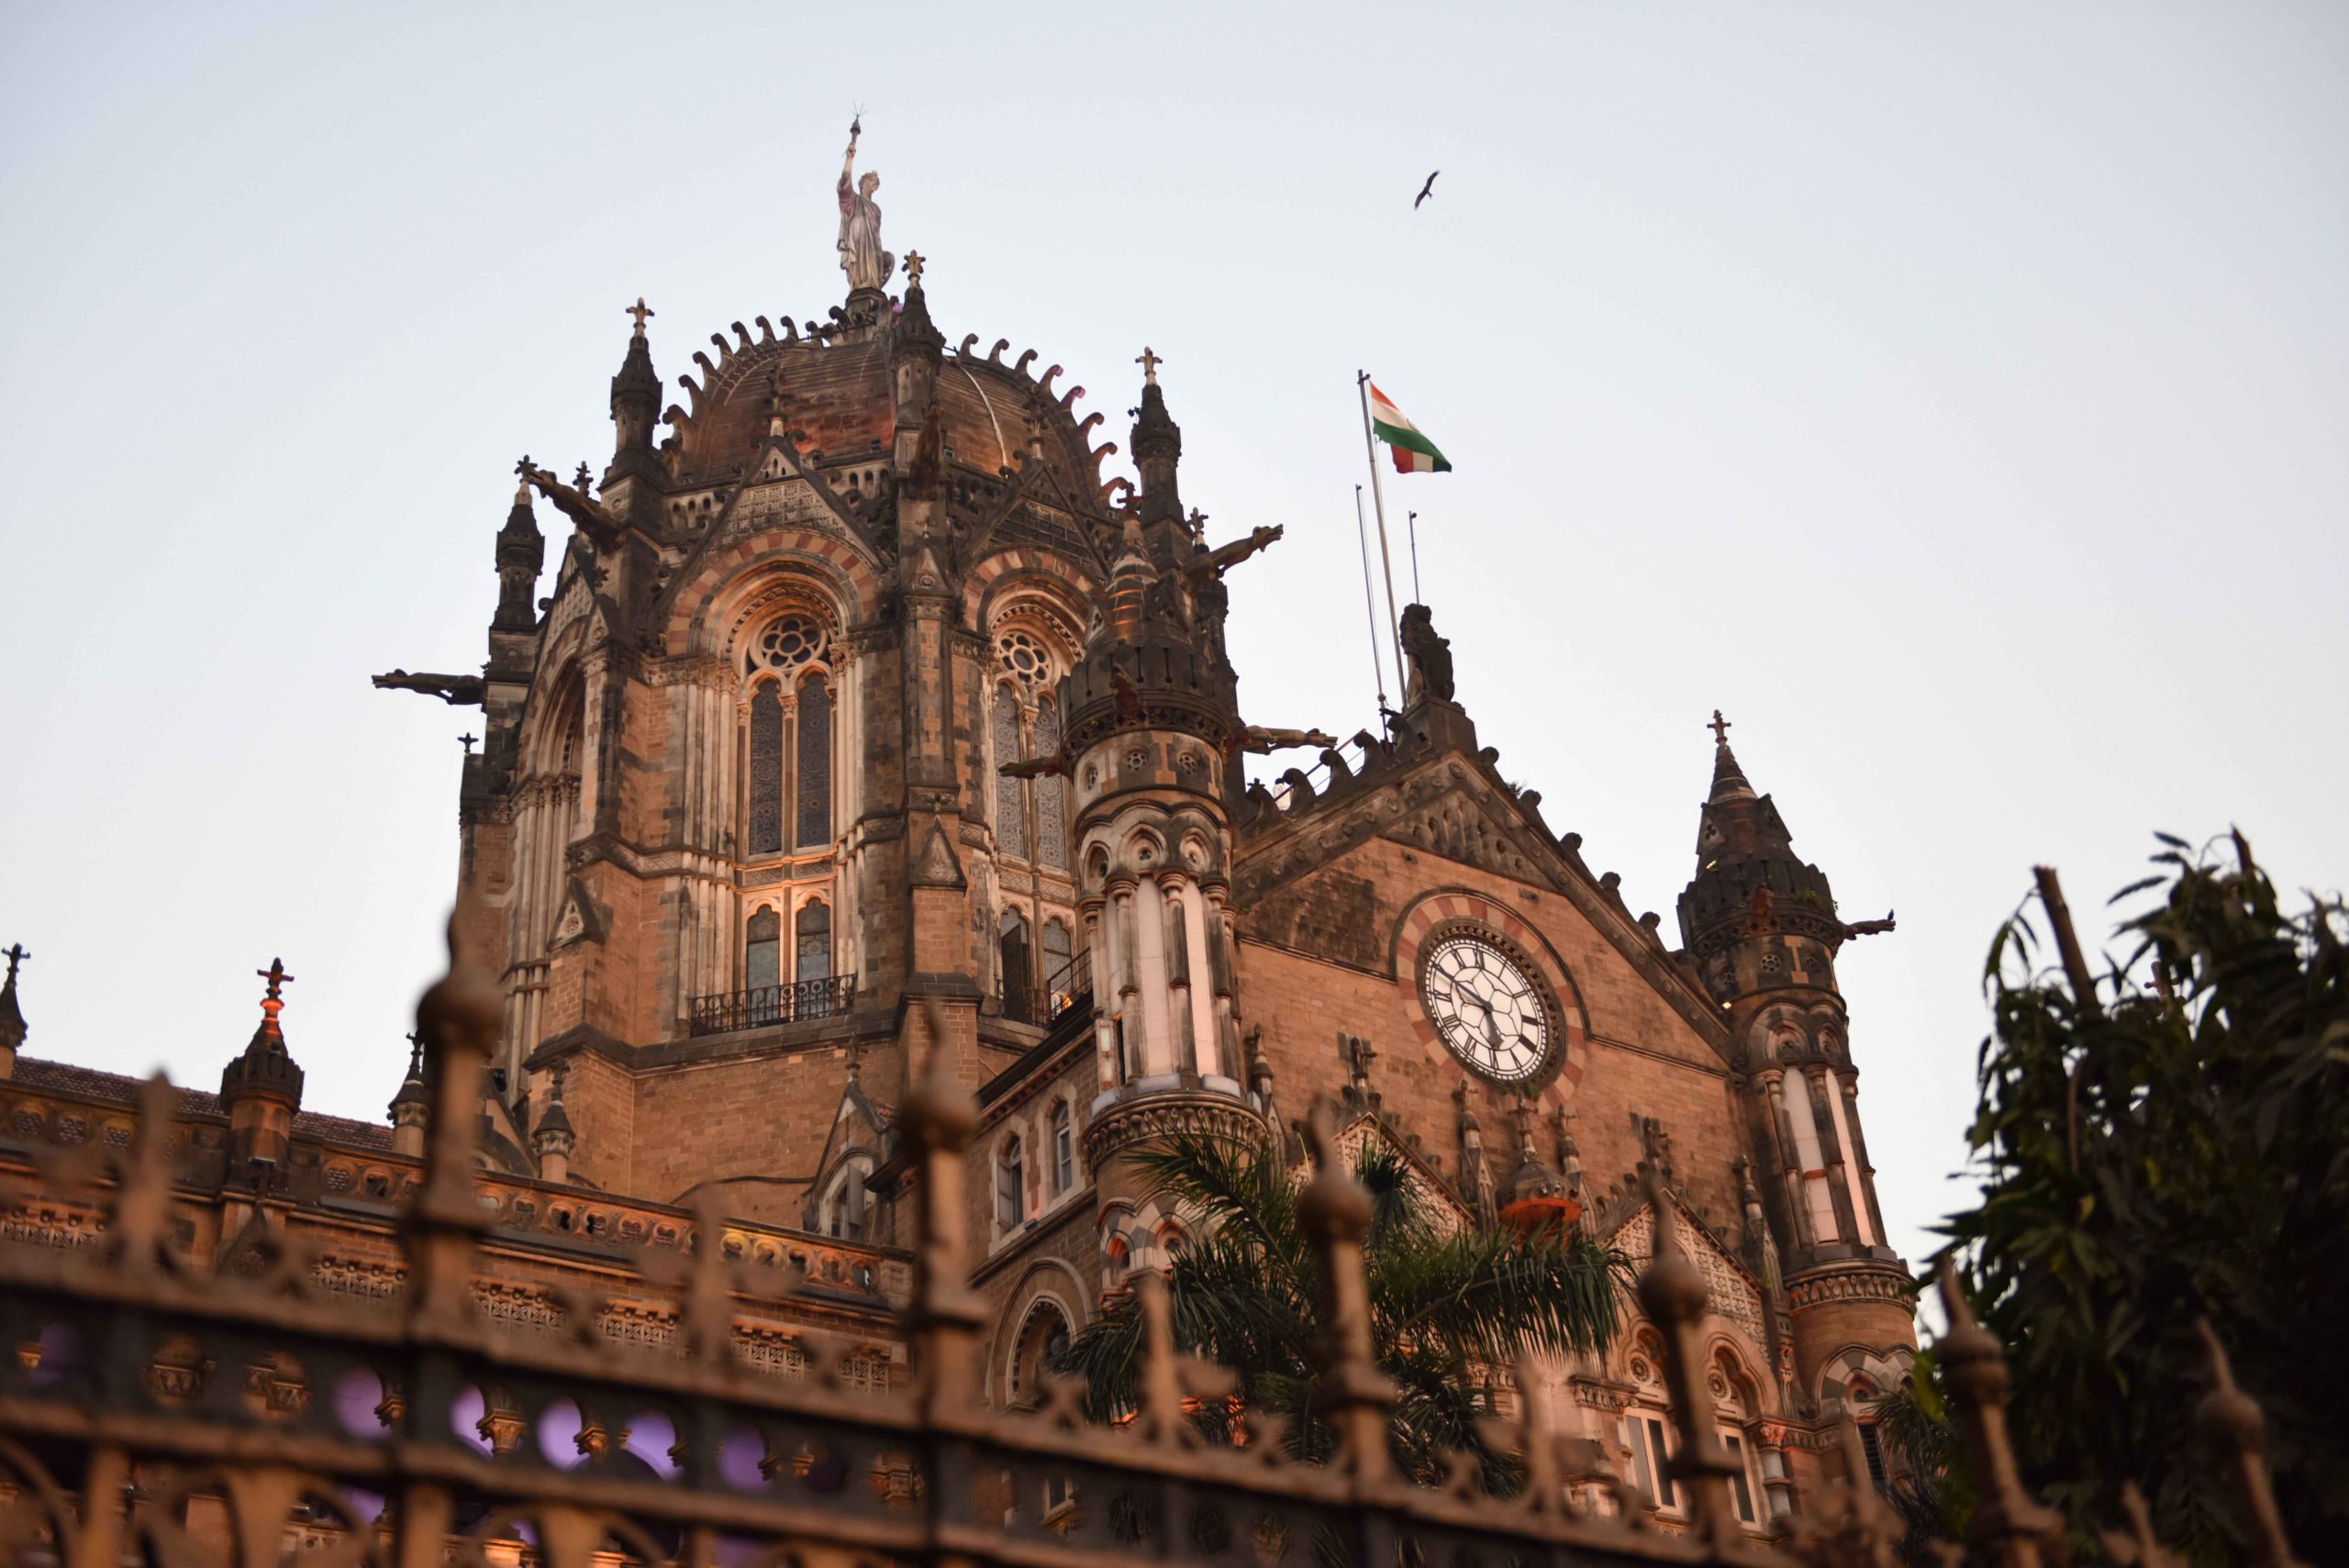 Central dome and clock, Chhatrapati Shivaji Terminus, begun 1878, Mumbai (photo: Francisco Antunes, CC BY 2.0)